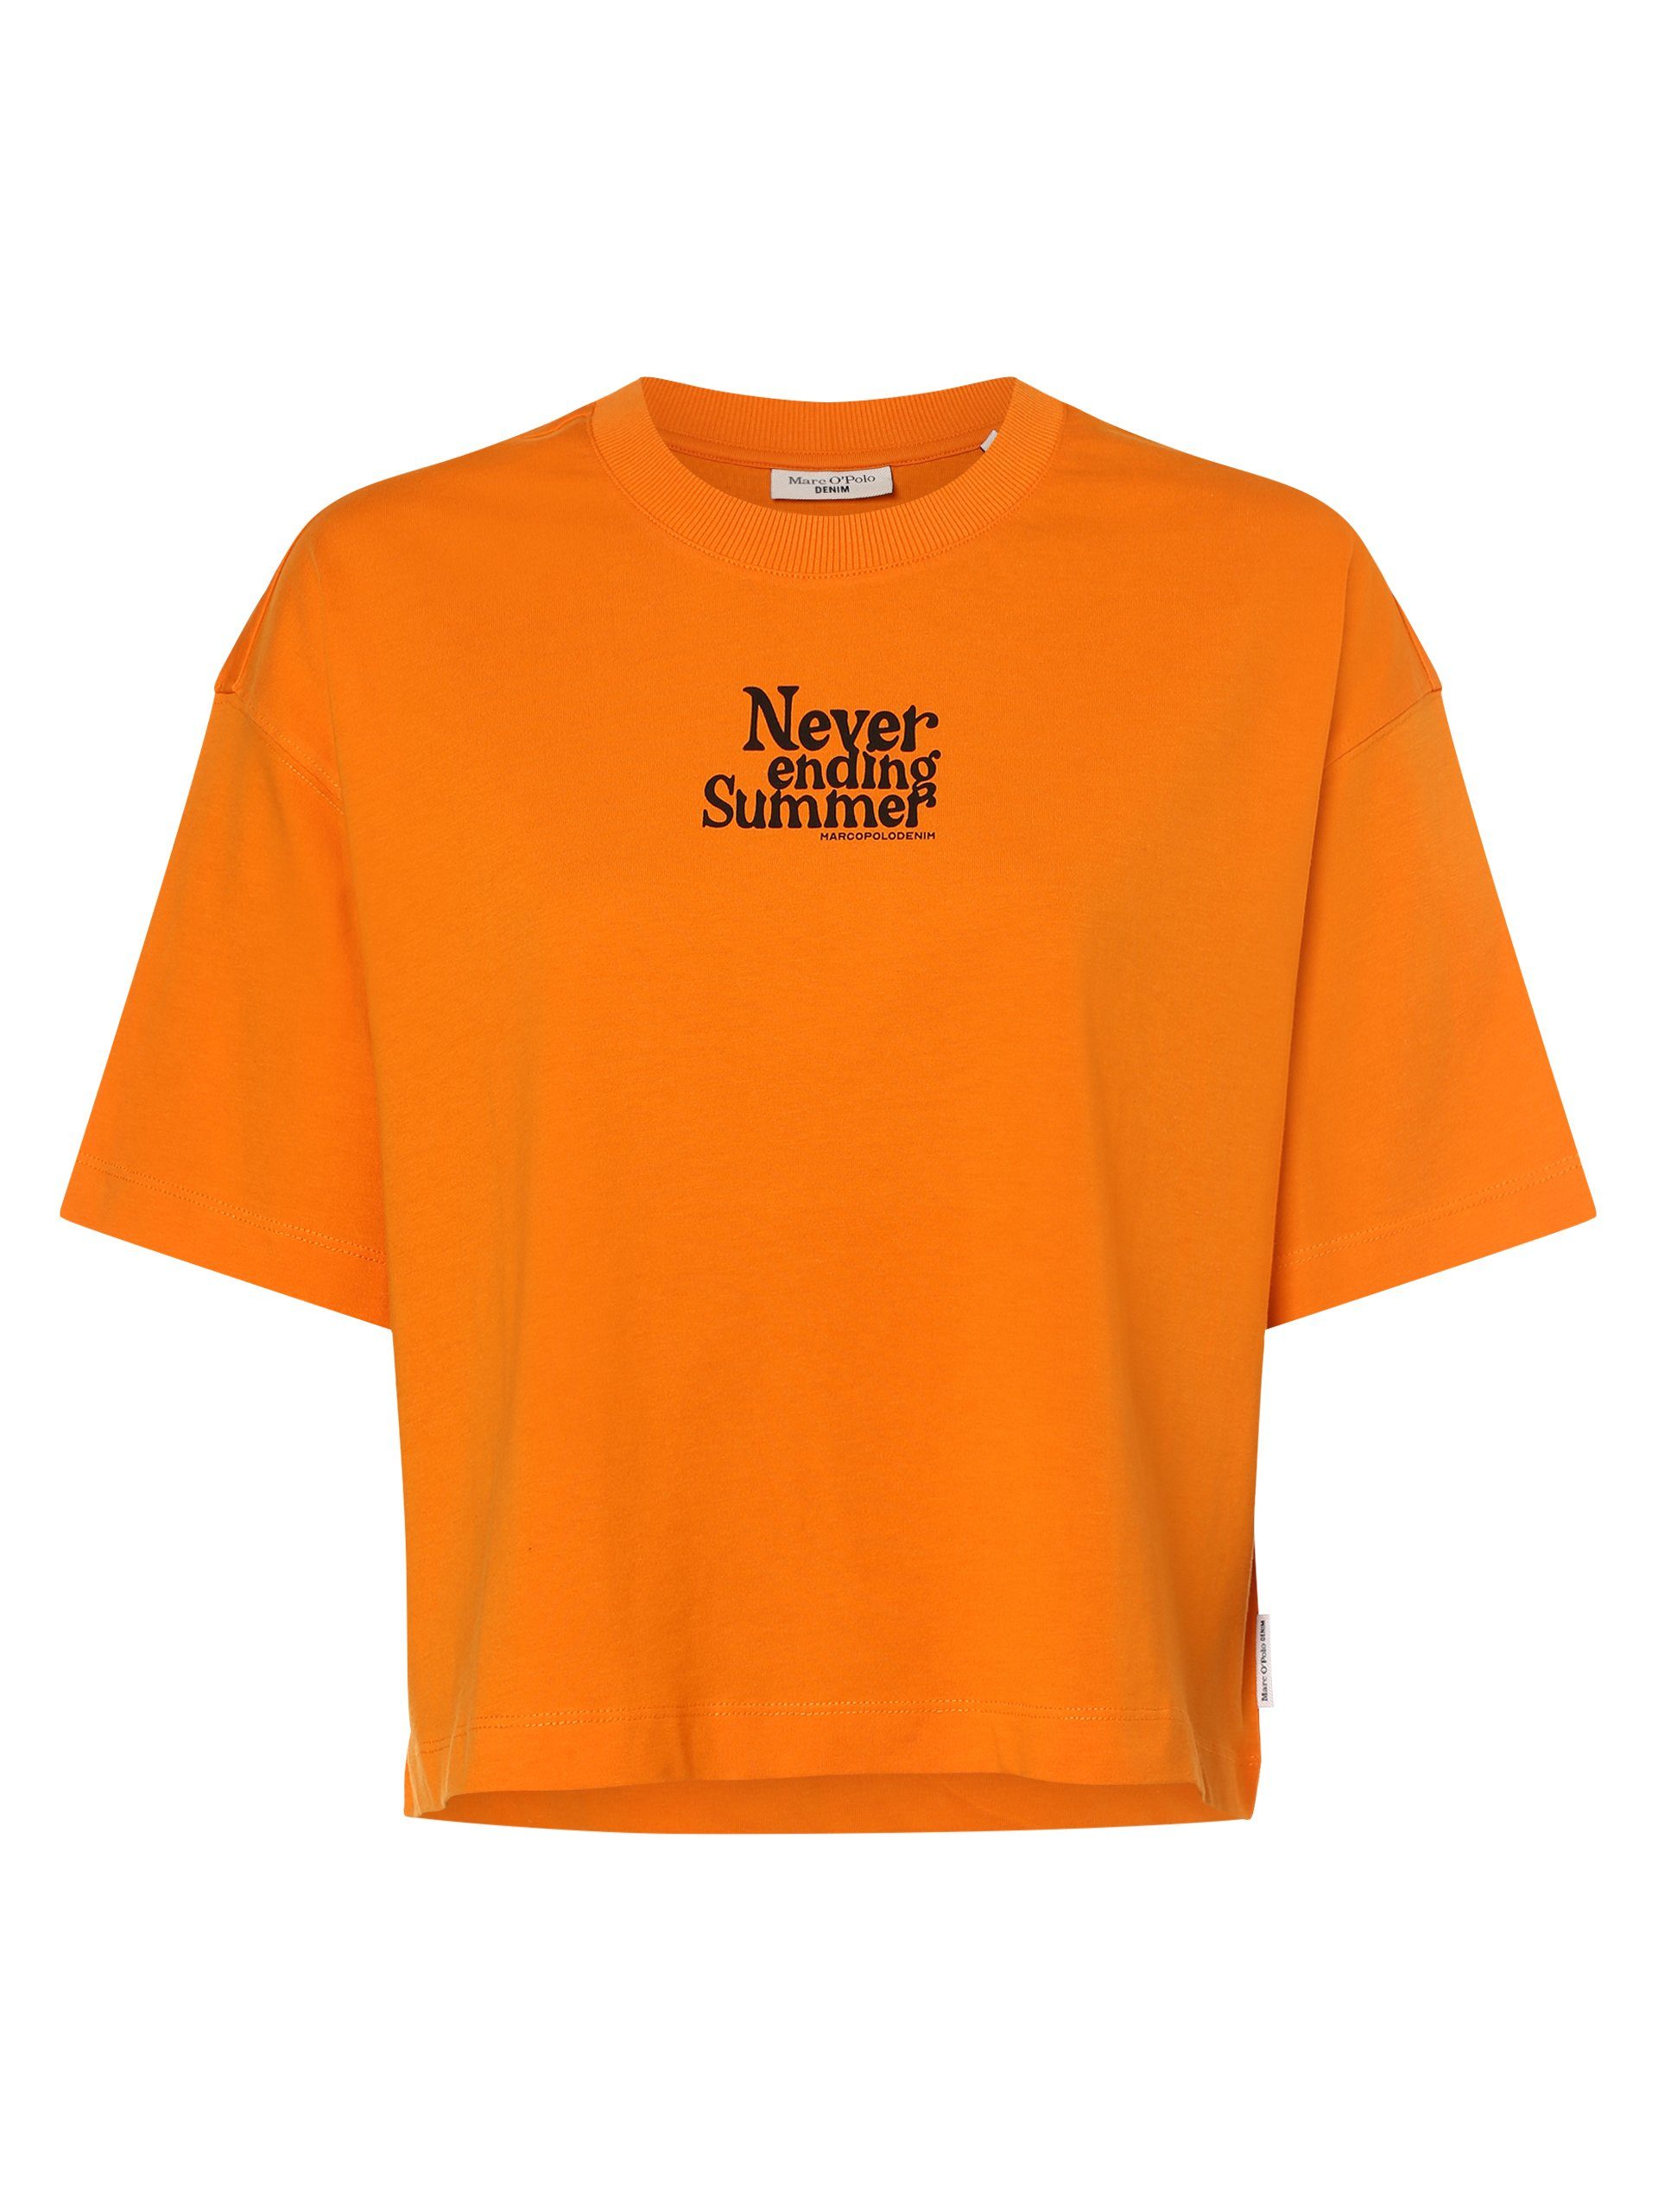 Marc O'Polo DENIM T-Shirt orange